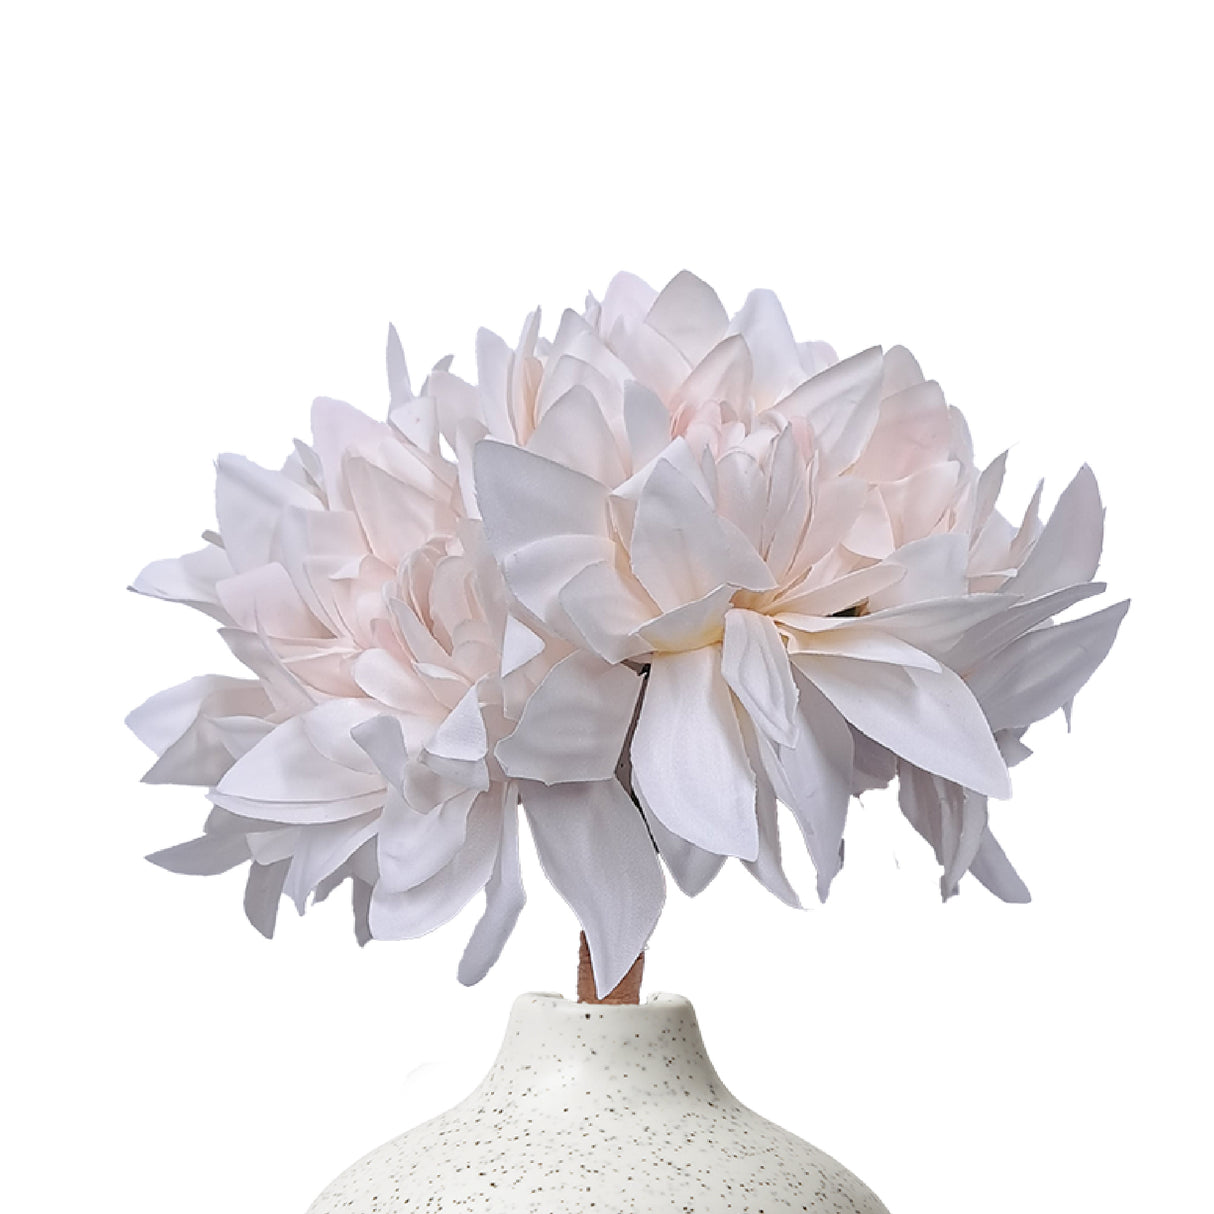 White lotus bloom artificial flowers 